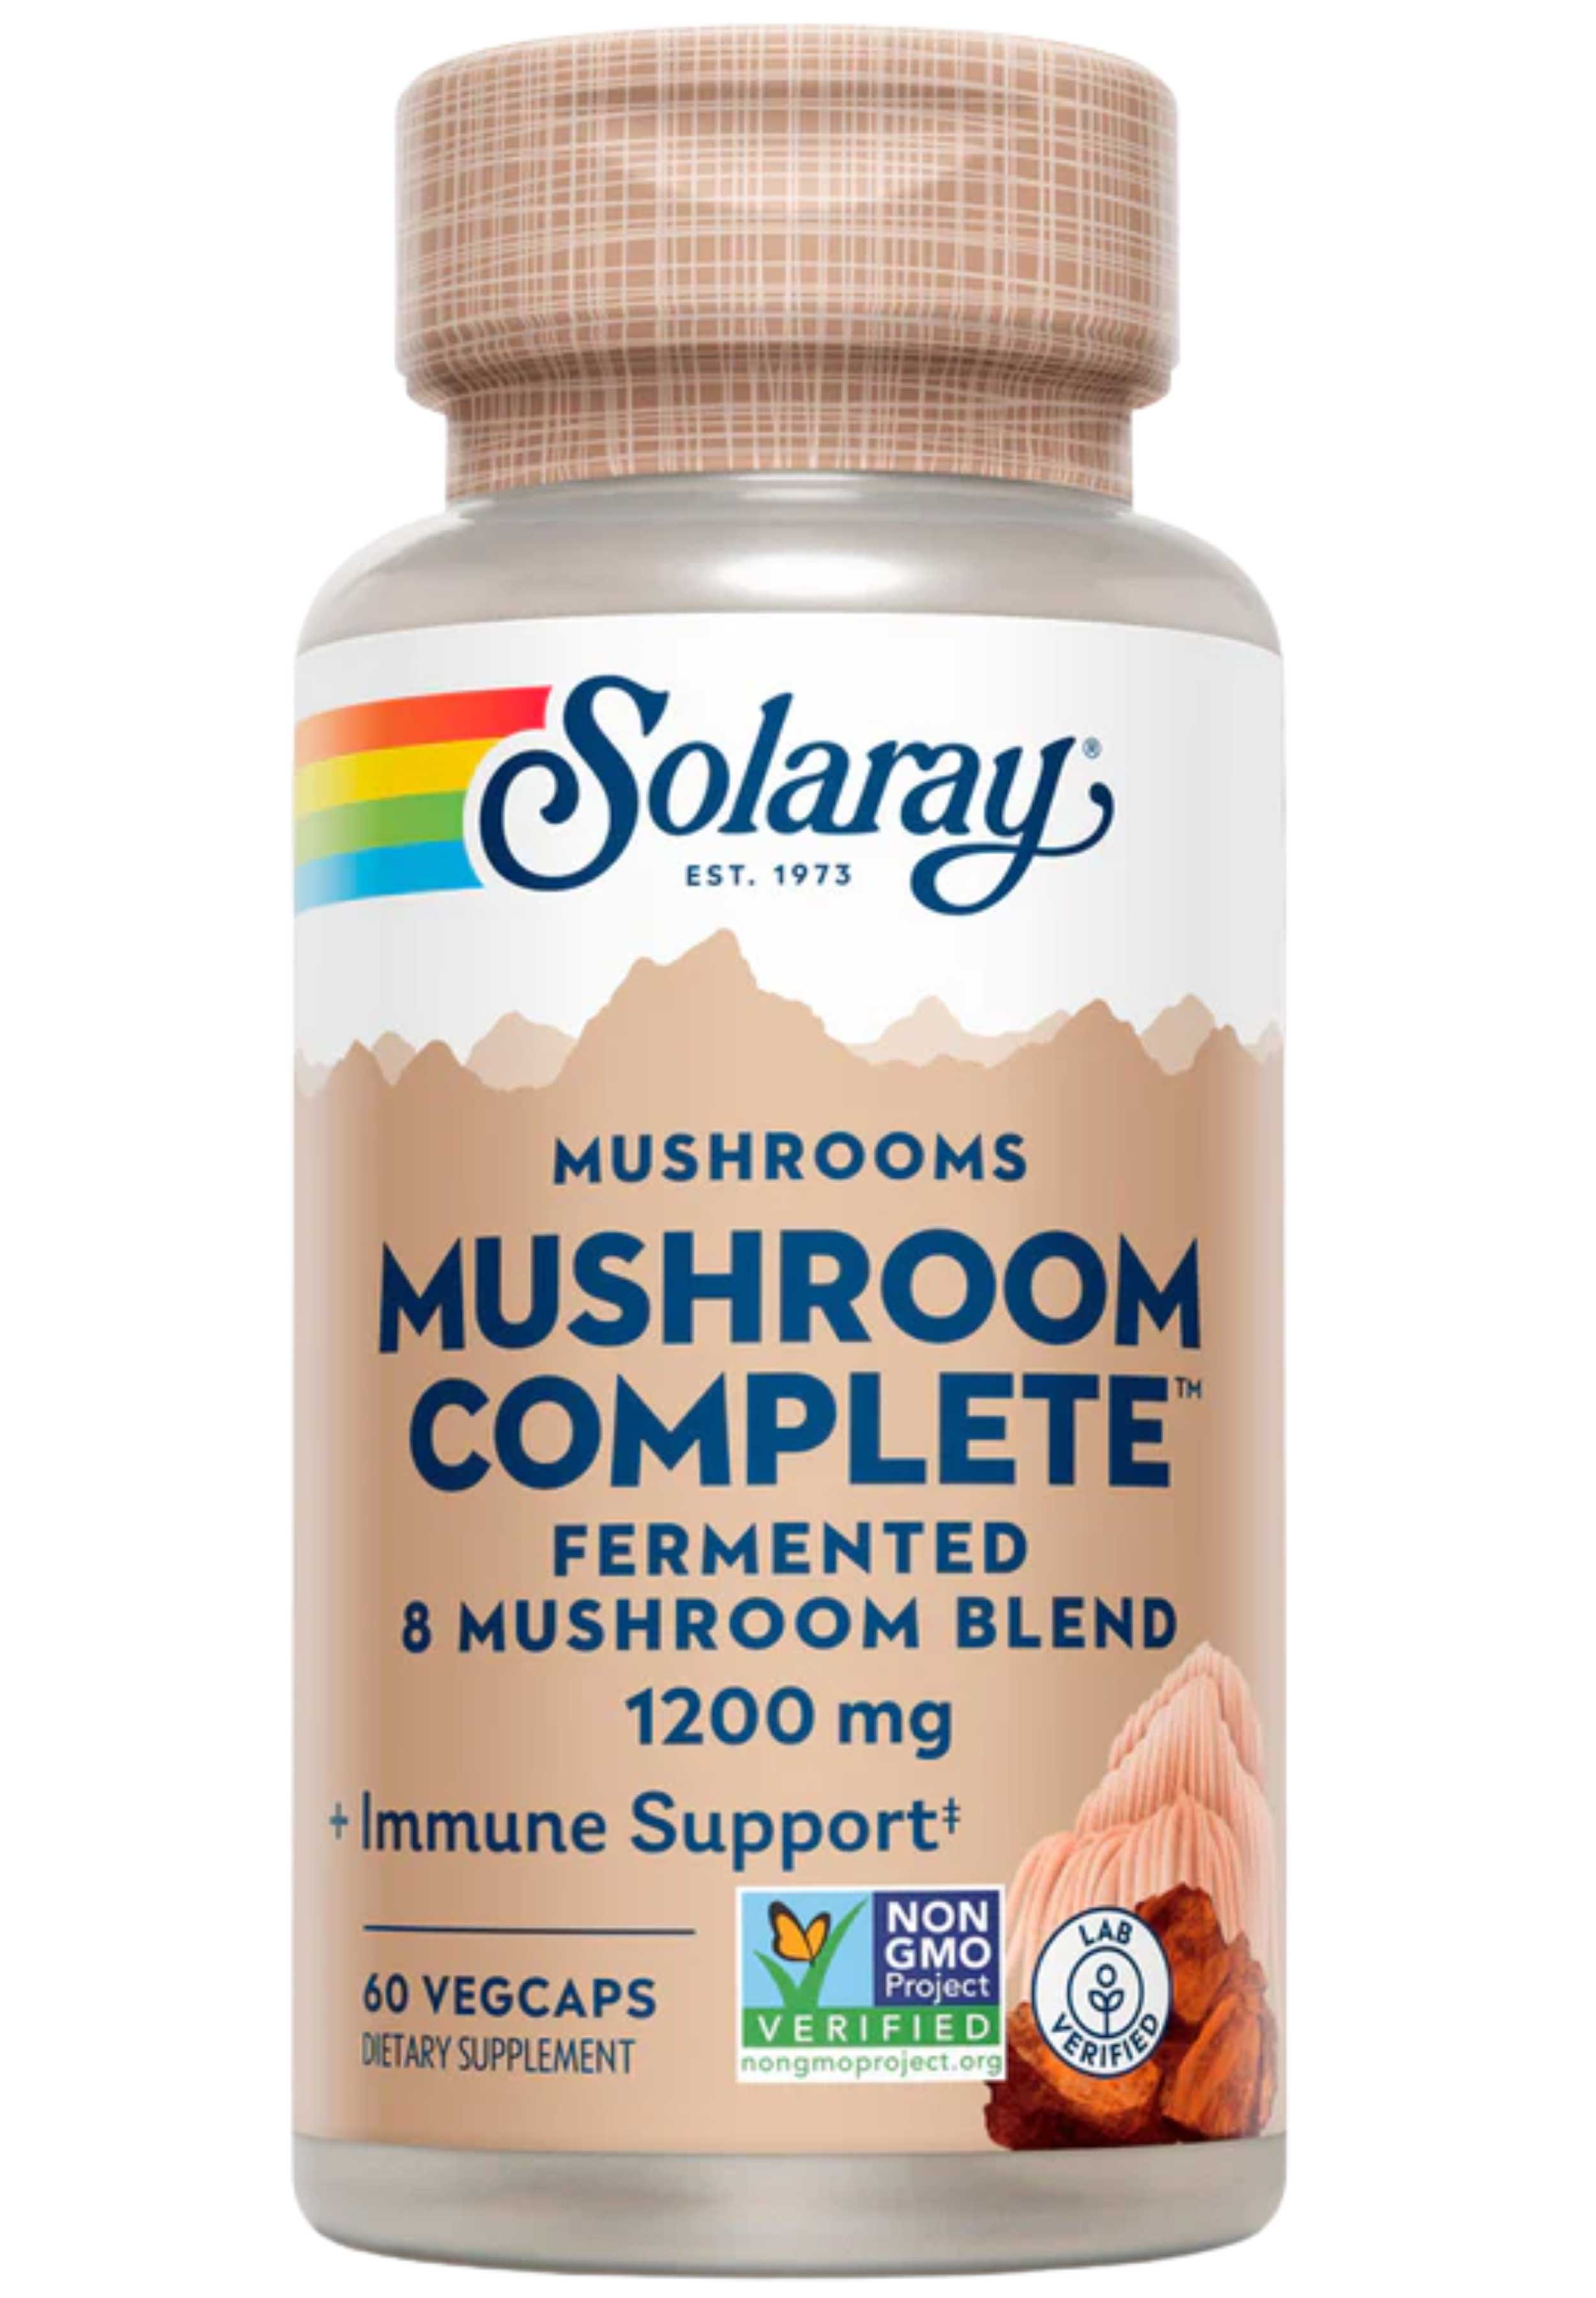 Solaray Fermented Mushroom Complete 1200 mg